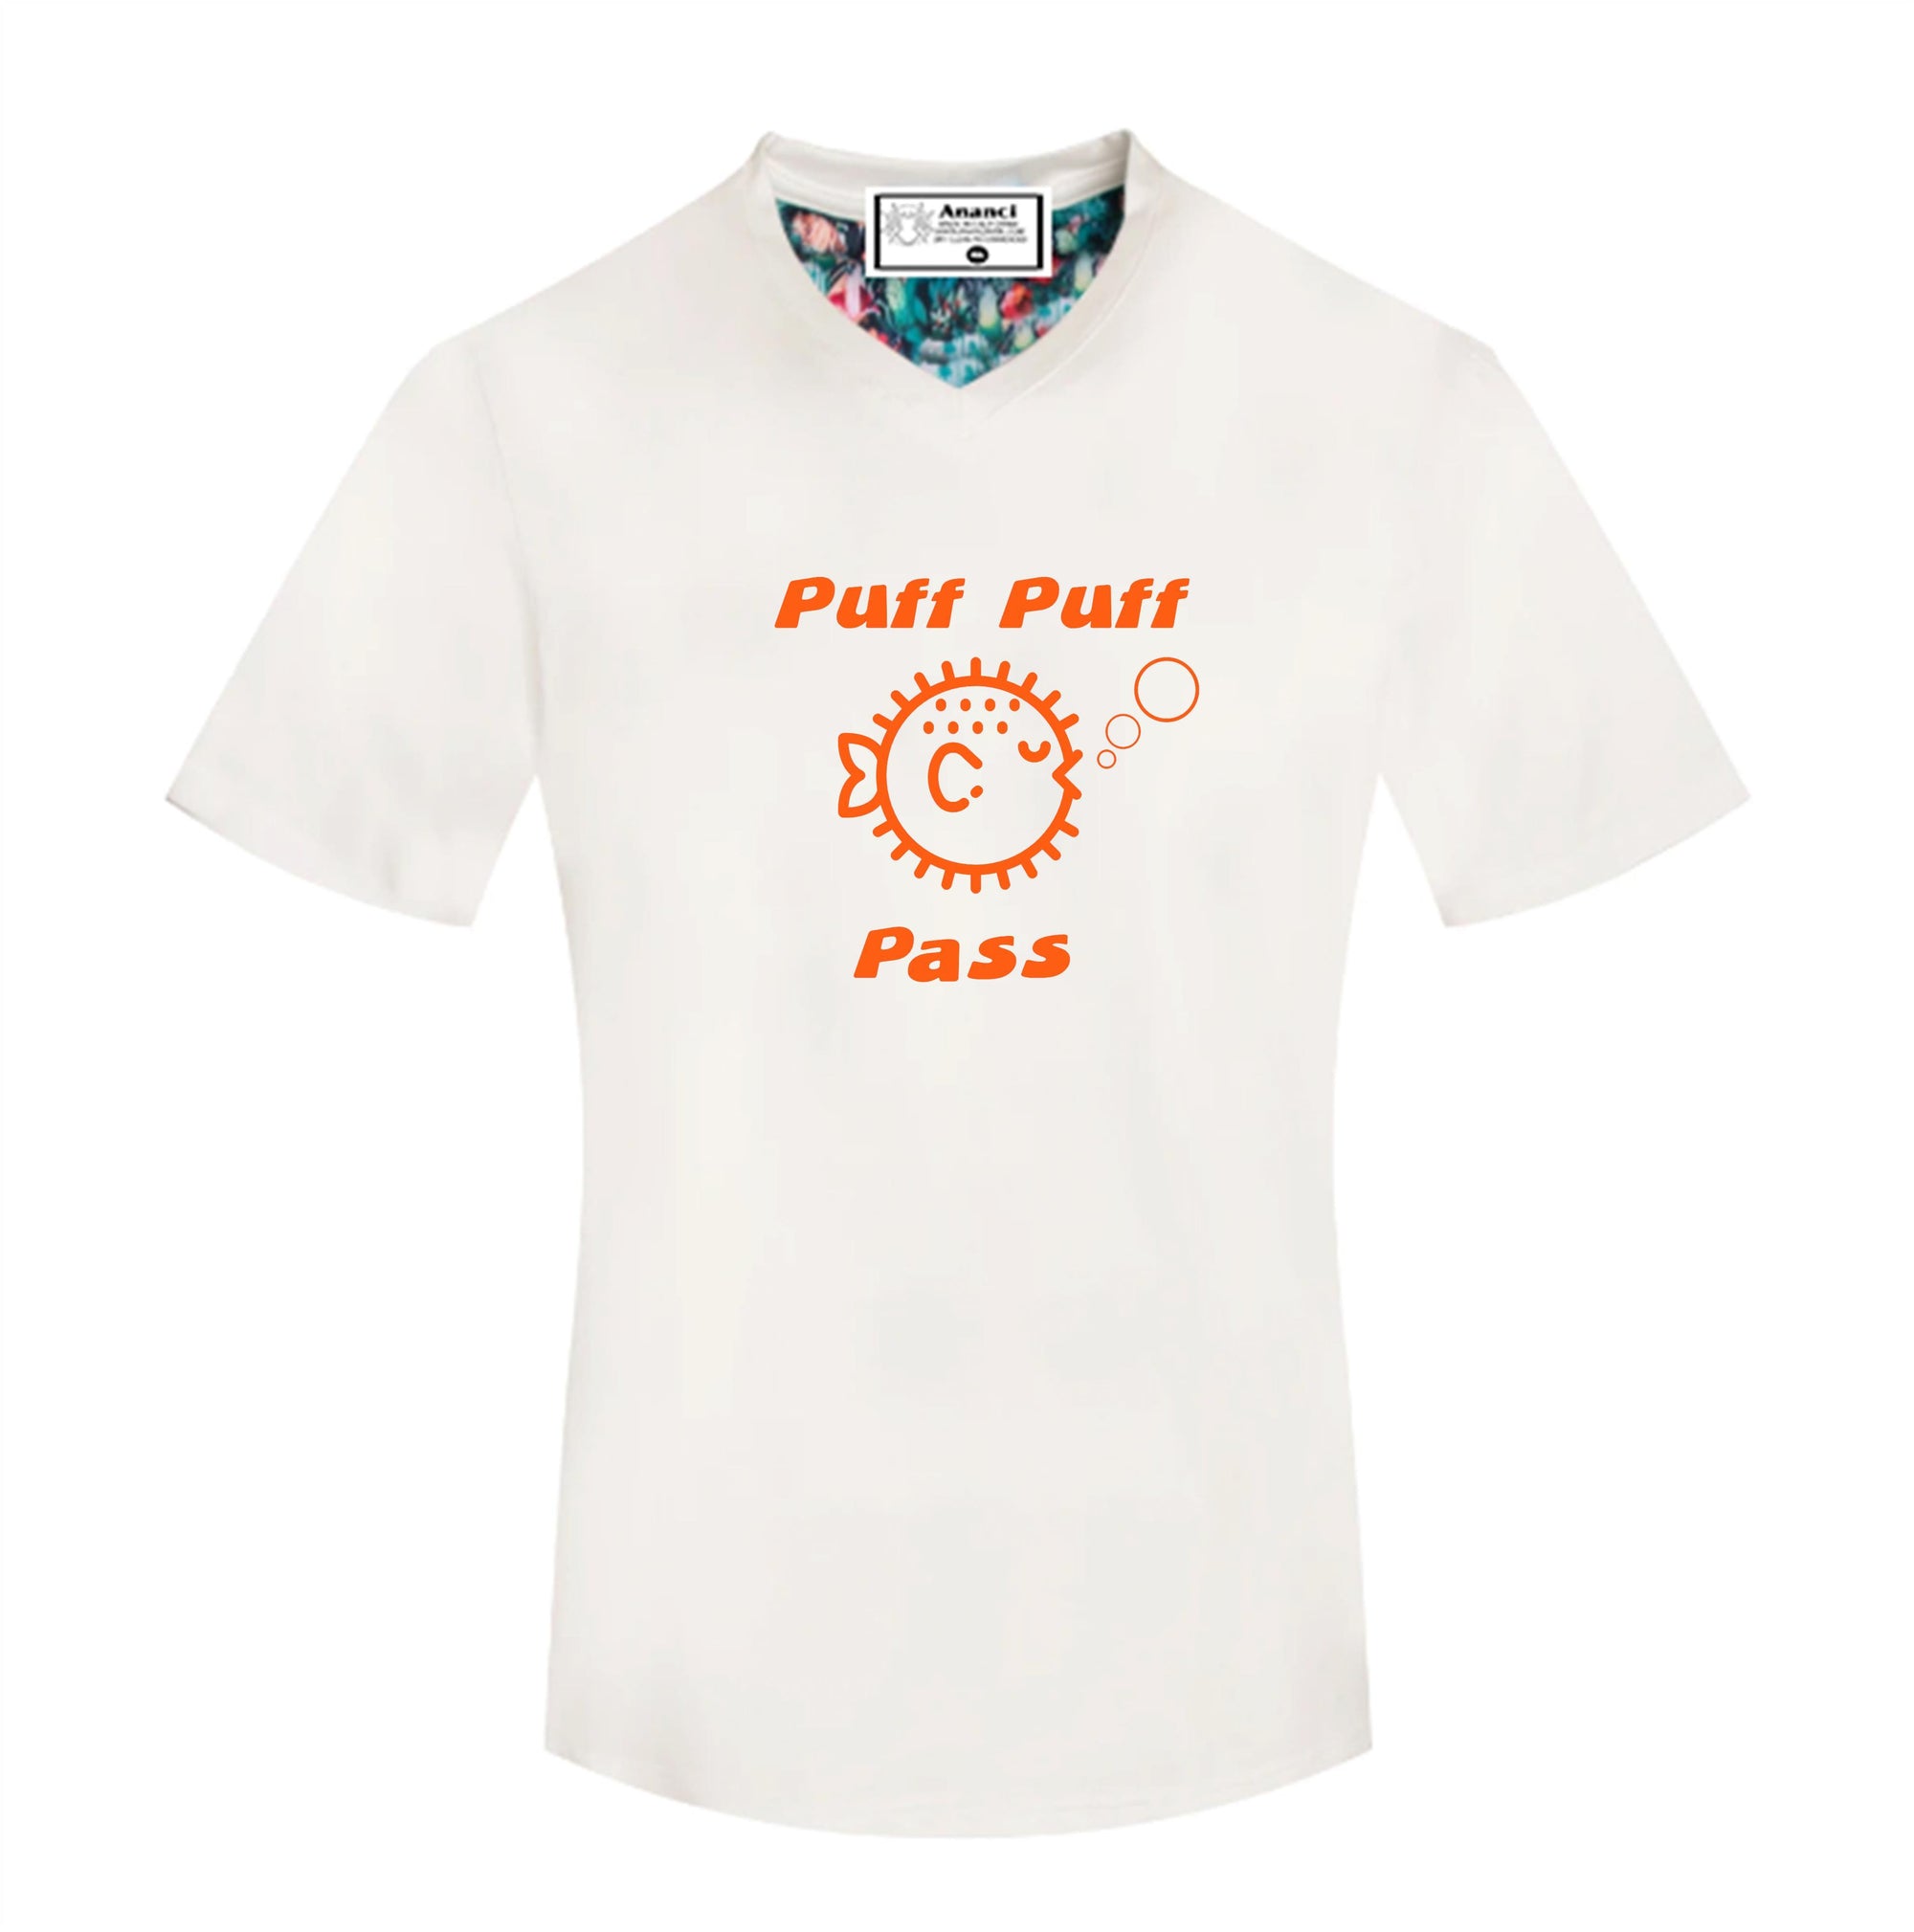 Puff, Puff, Pass Tshirts